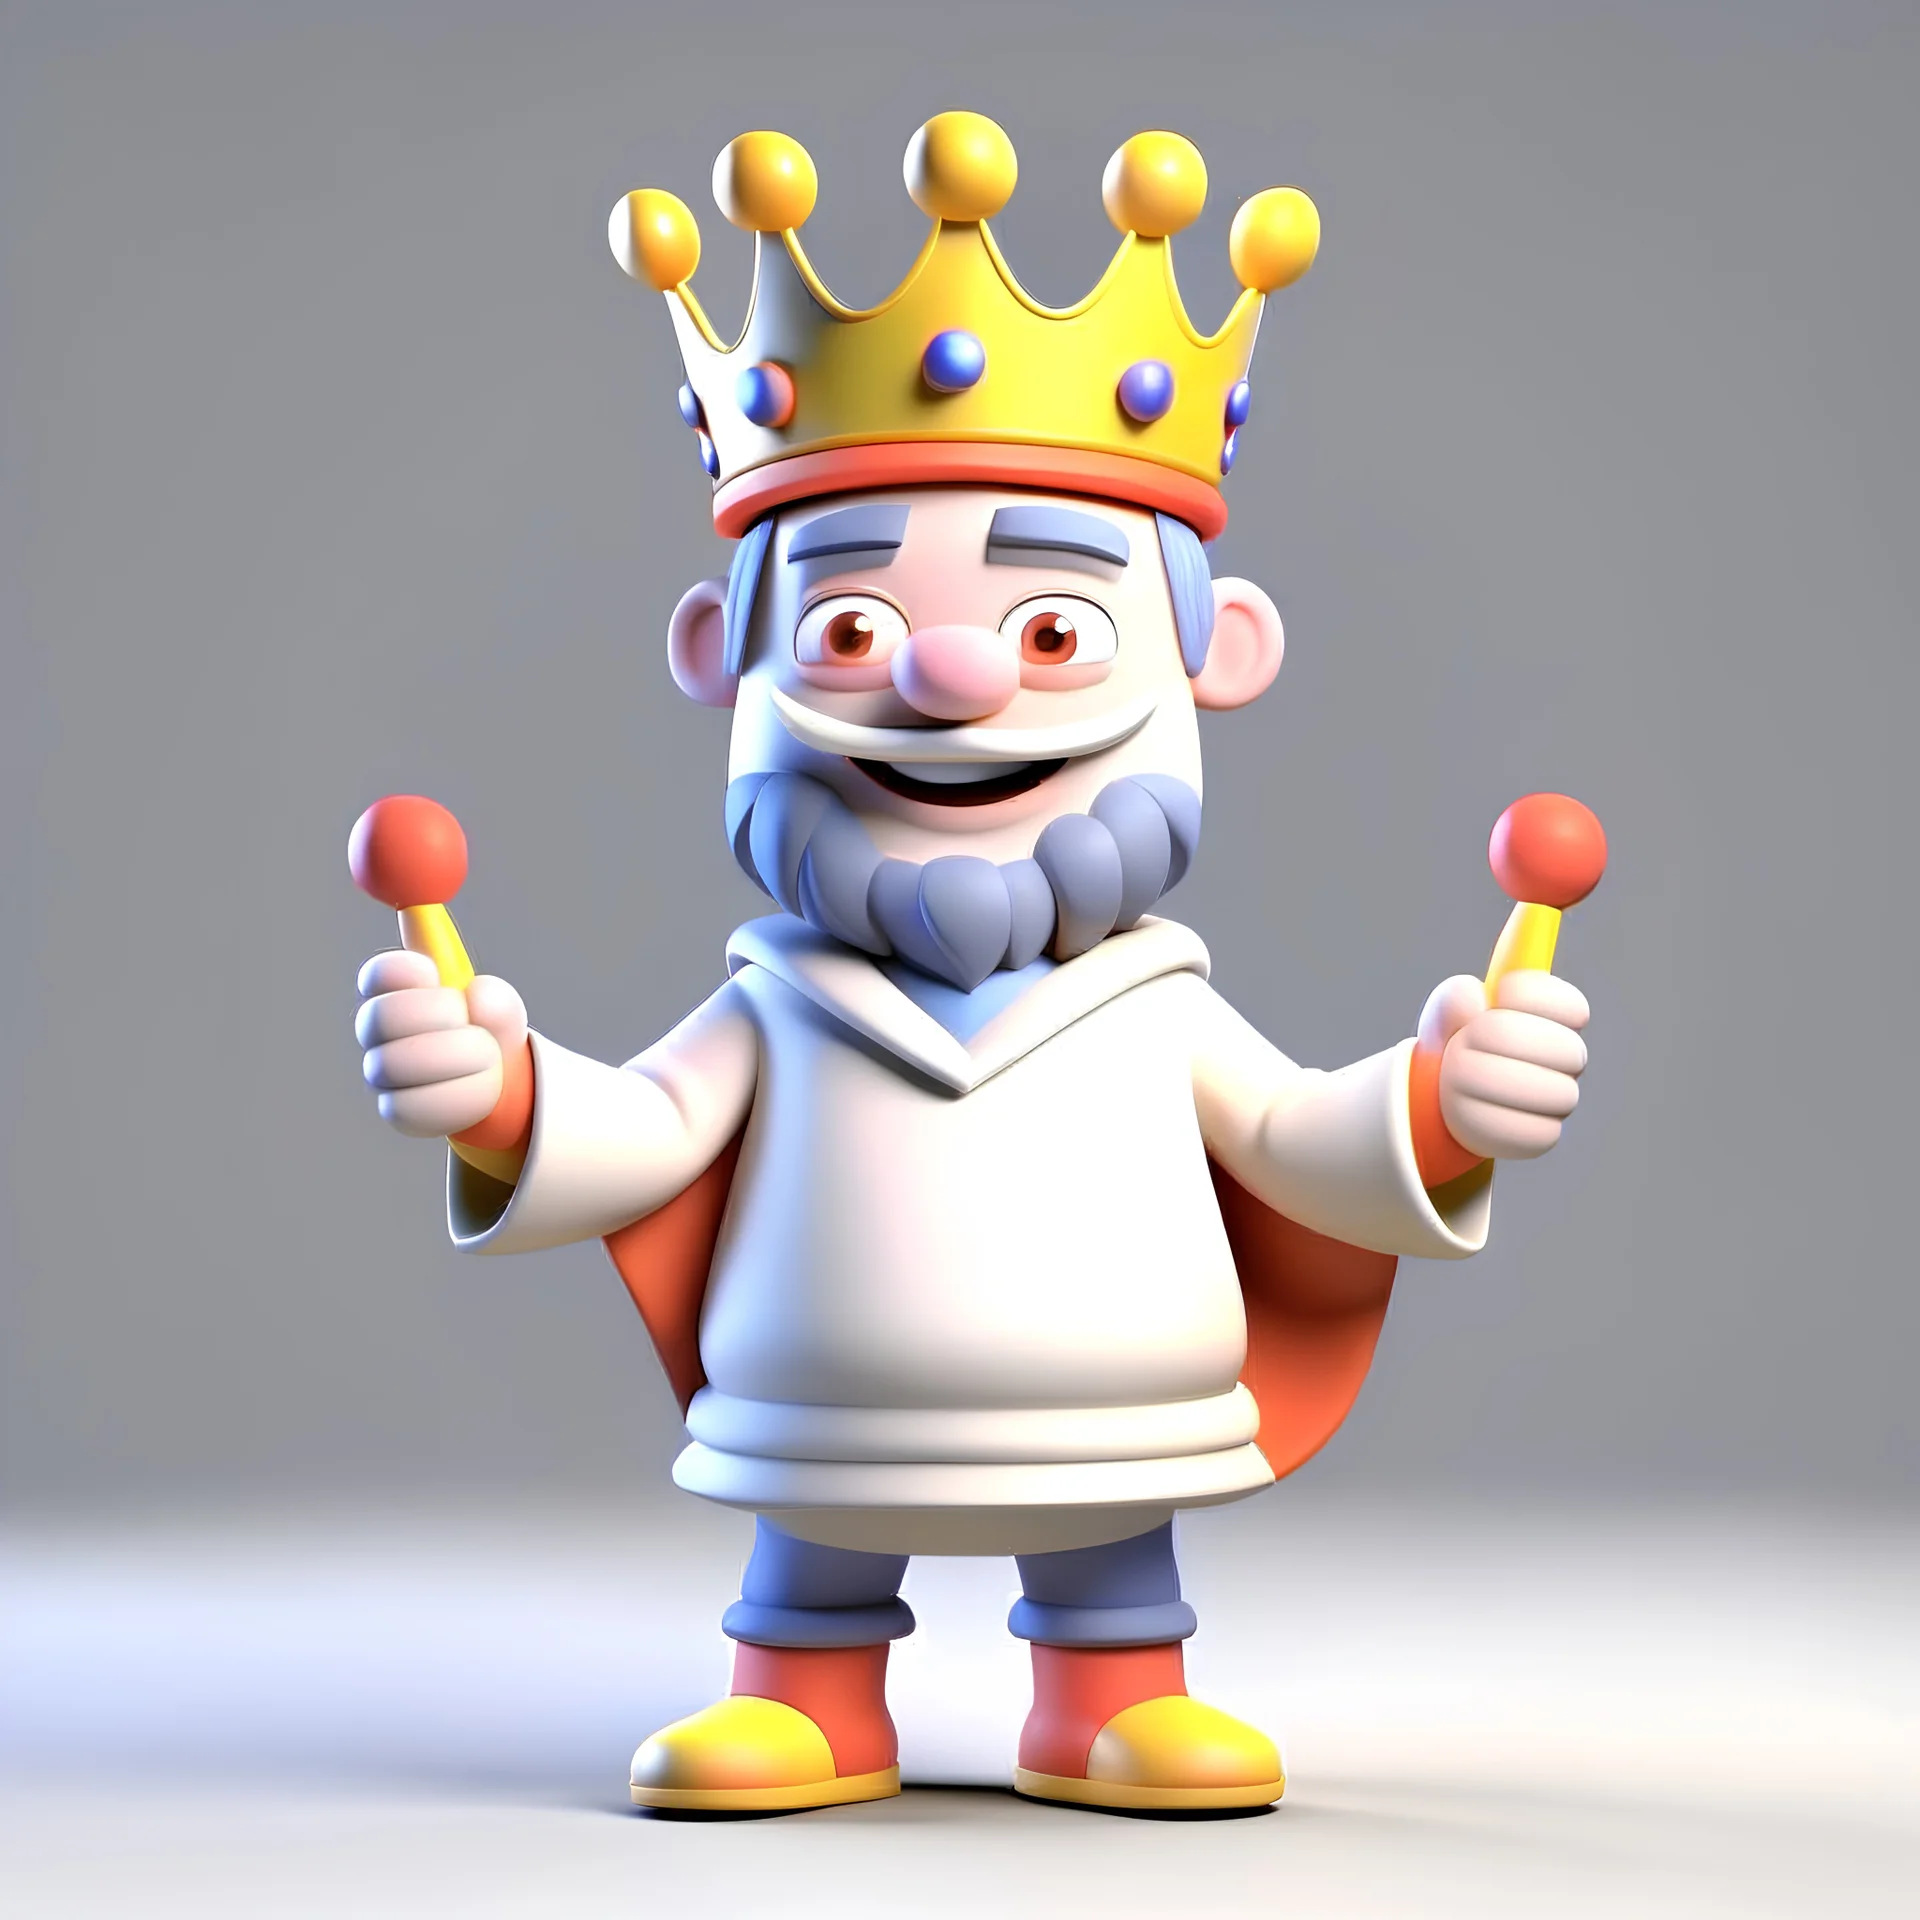 King cheerful 3D